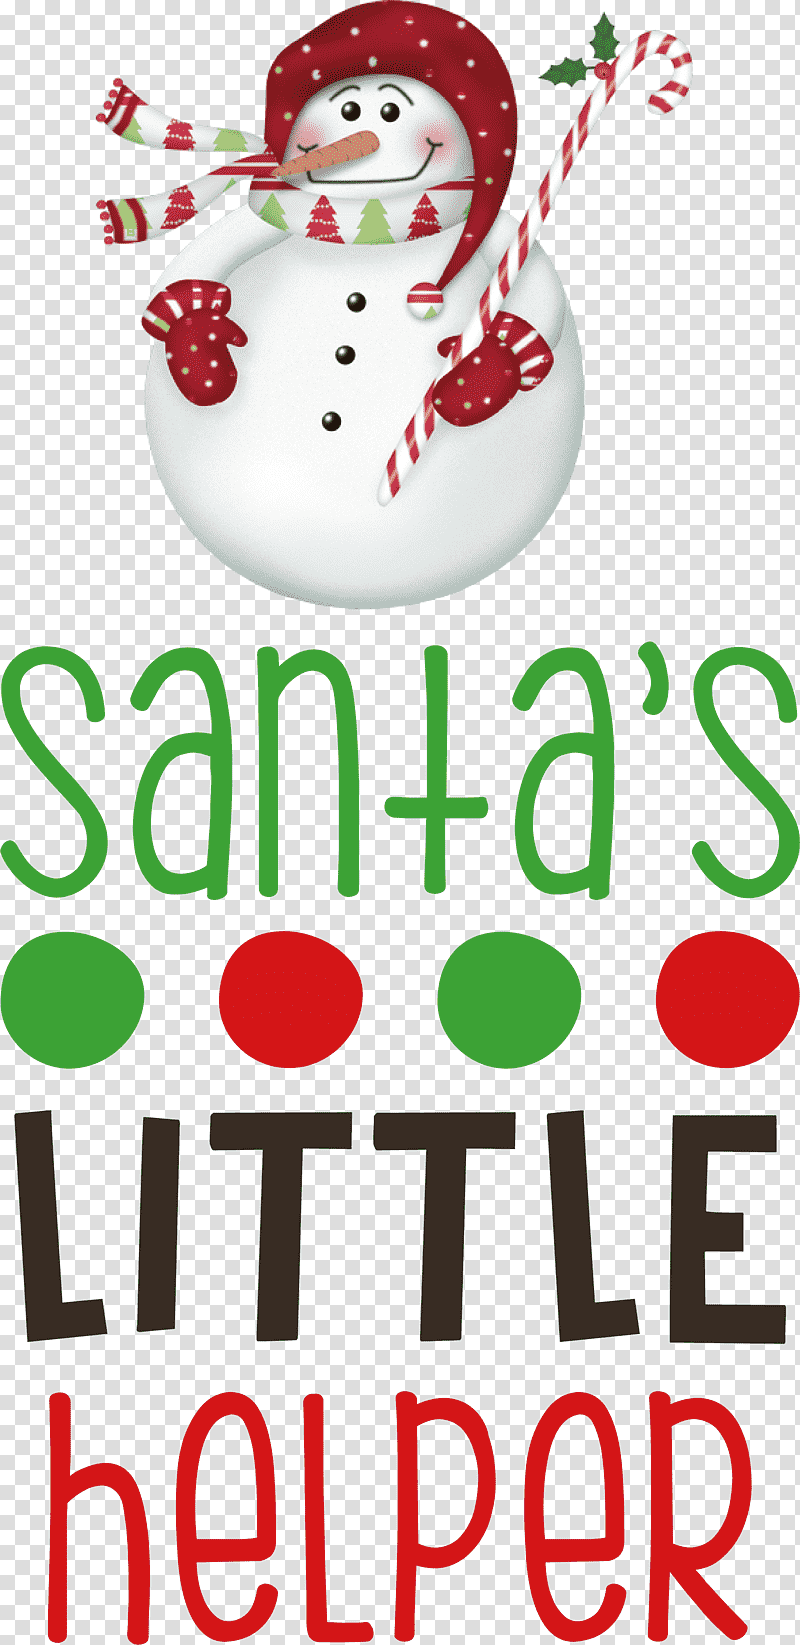 Santas little helper Santa, Christmas Day, Christmas Ornament, Christmas Tree, Holiday Ornament, Christmas Ornament M, Meter transparent background PNG clipart